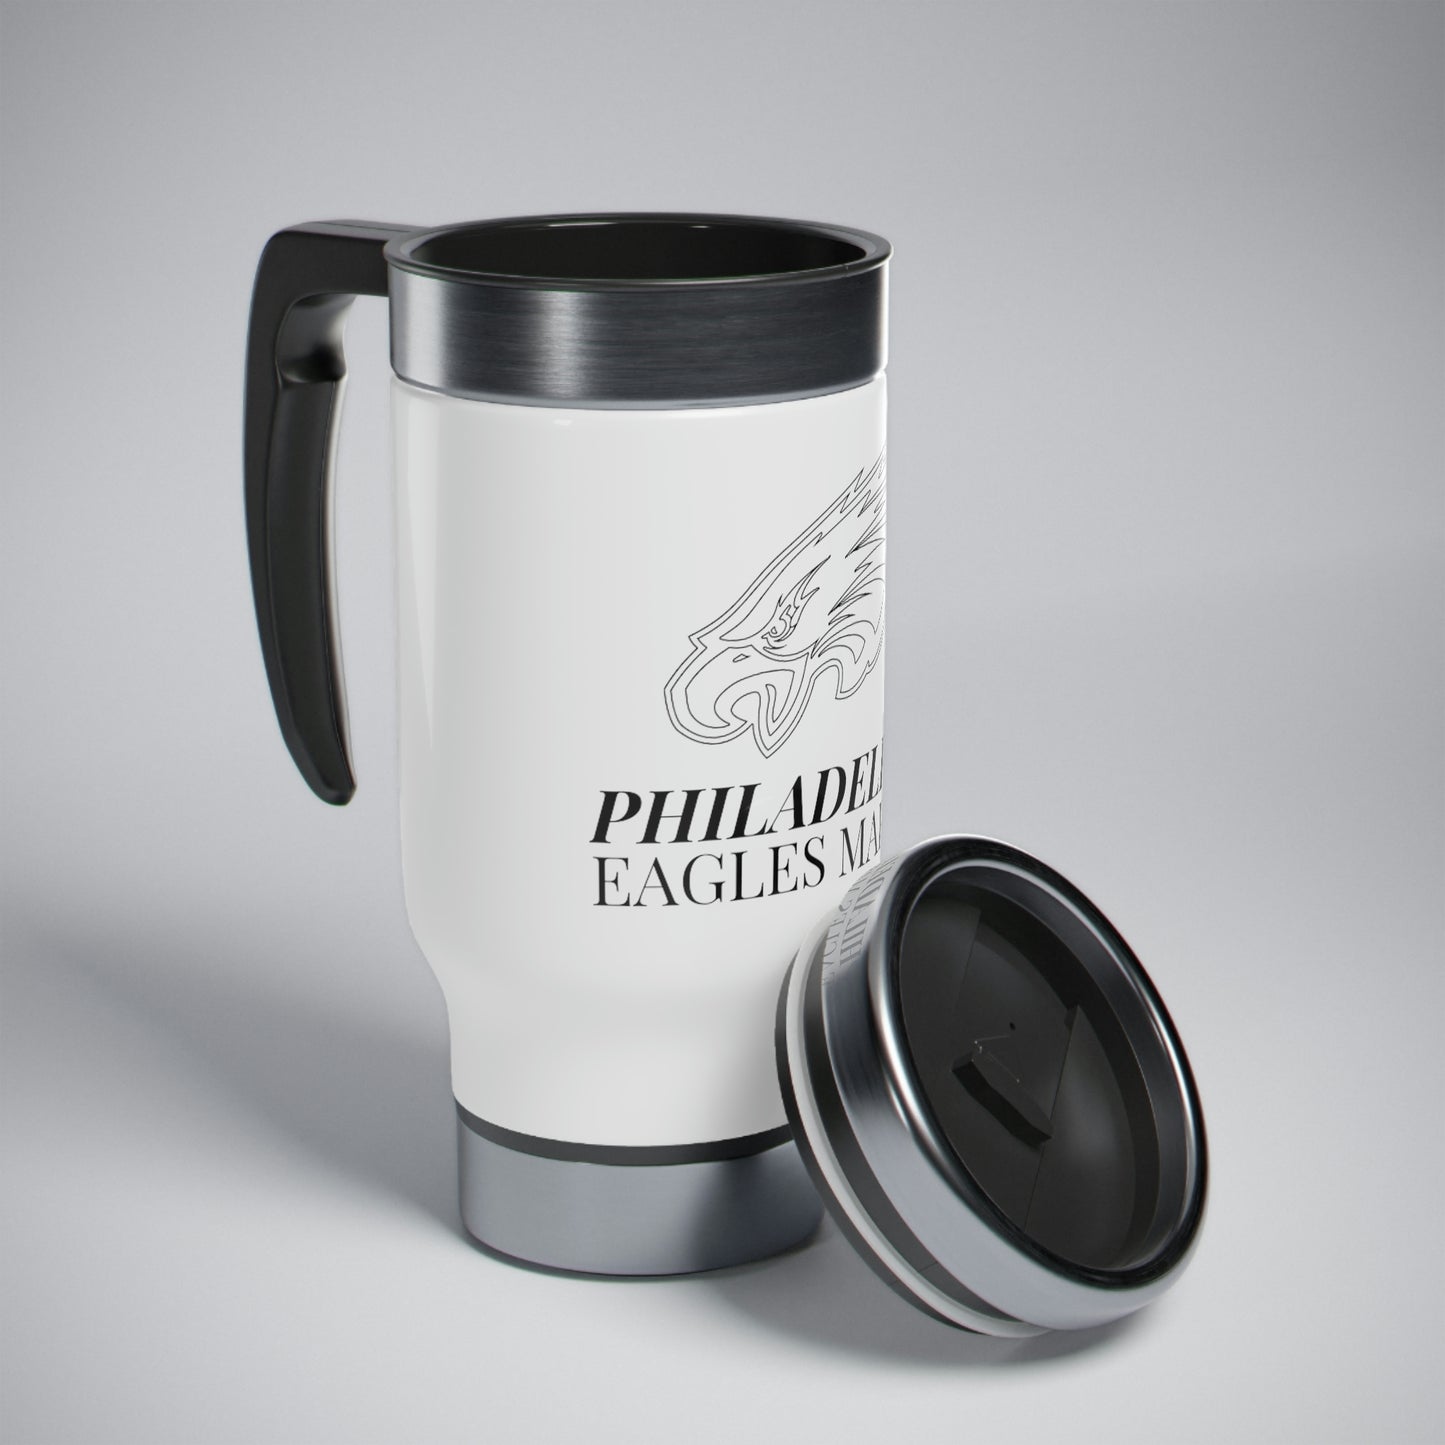 Philadelphia Eagles Market Stainless Steel Travel Mug with Handle, 14oz